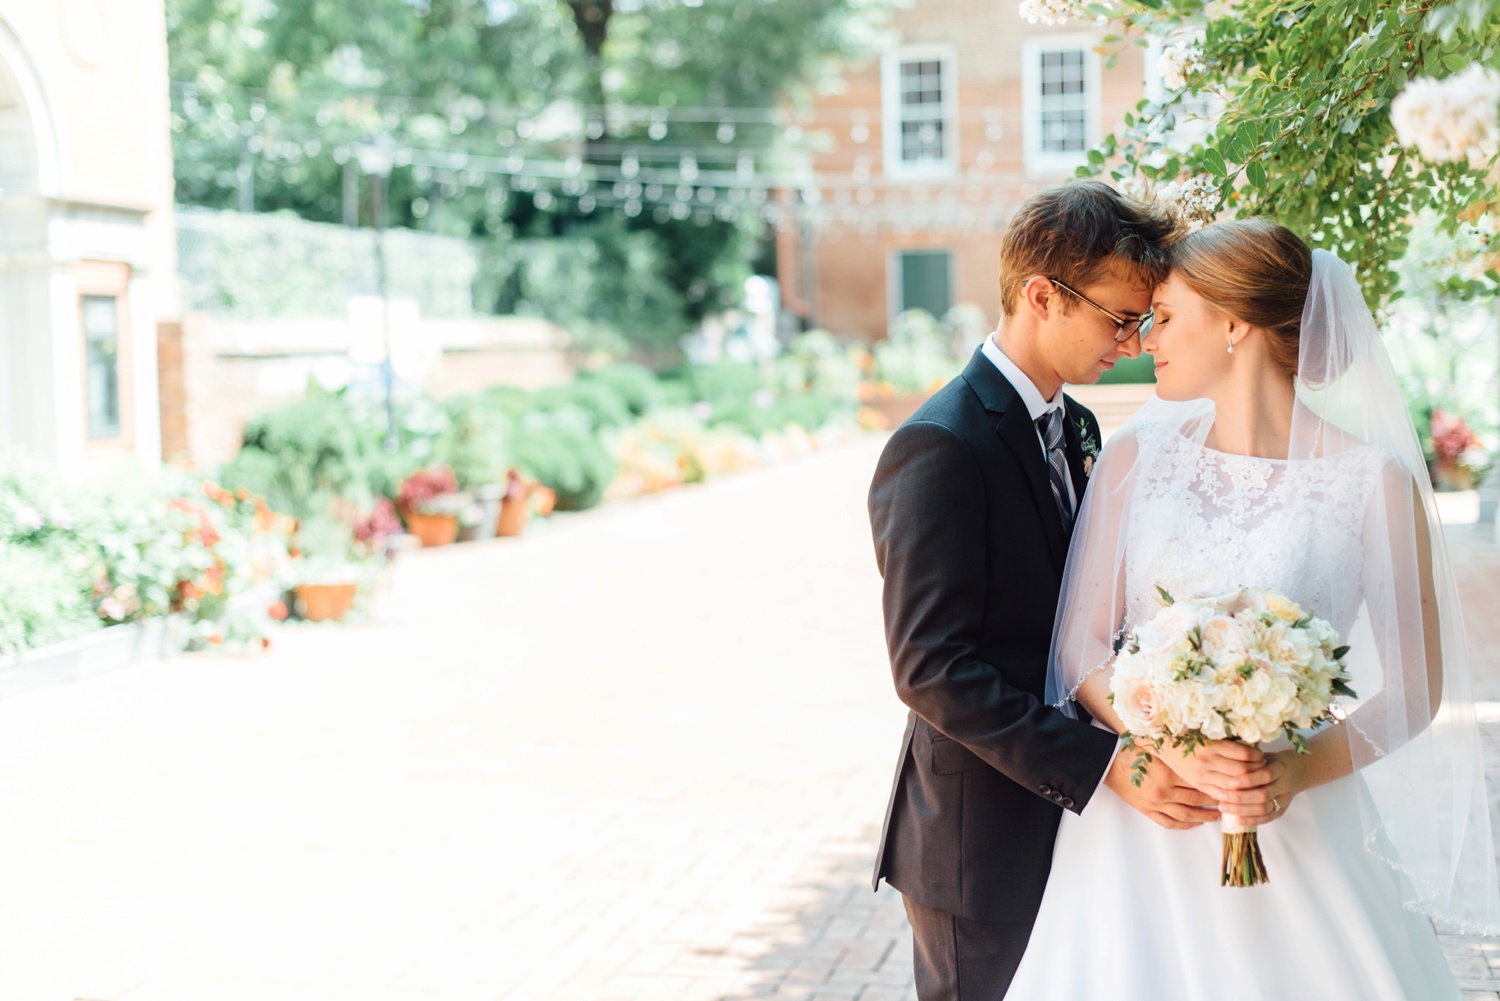 Hannah + Scott - 1840's Plaza - Baltimore Wedding Photographer - Alison Dunn Photography photo